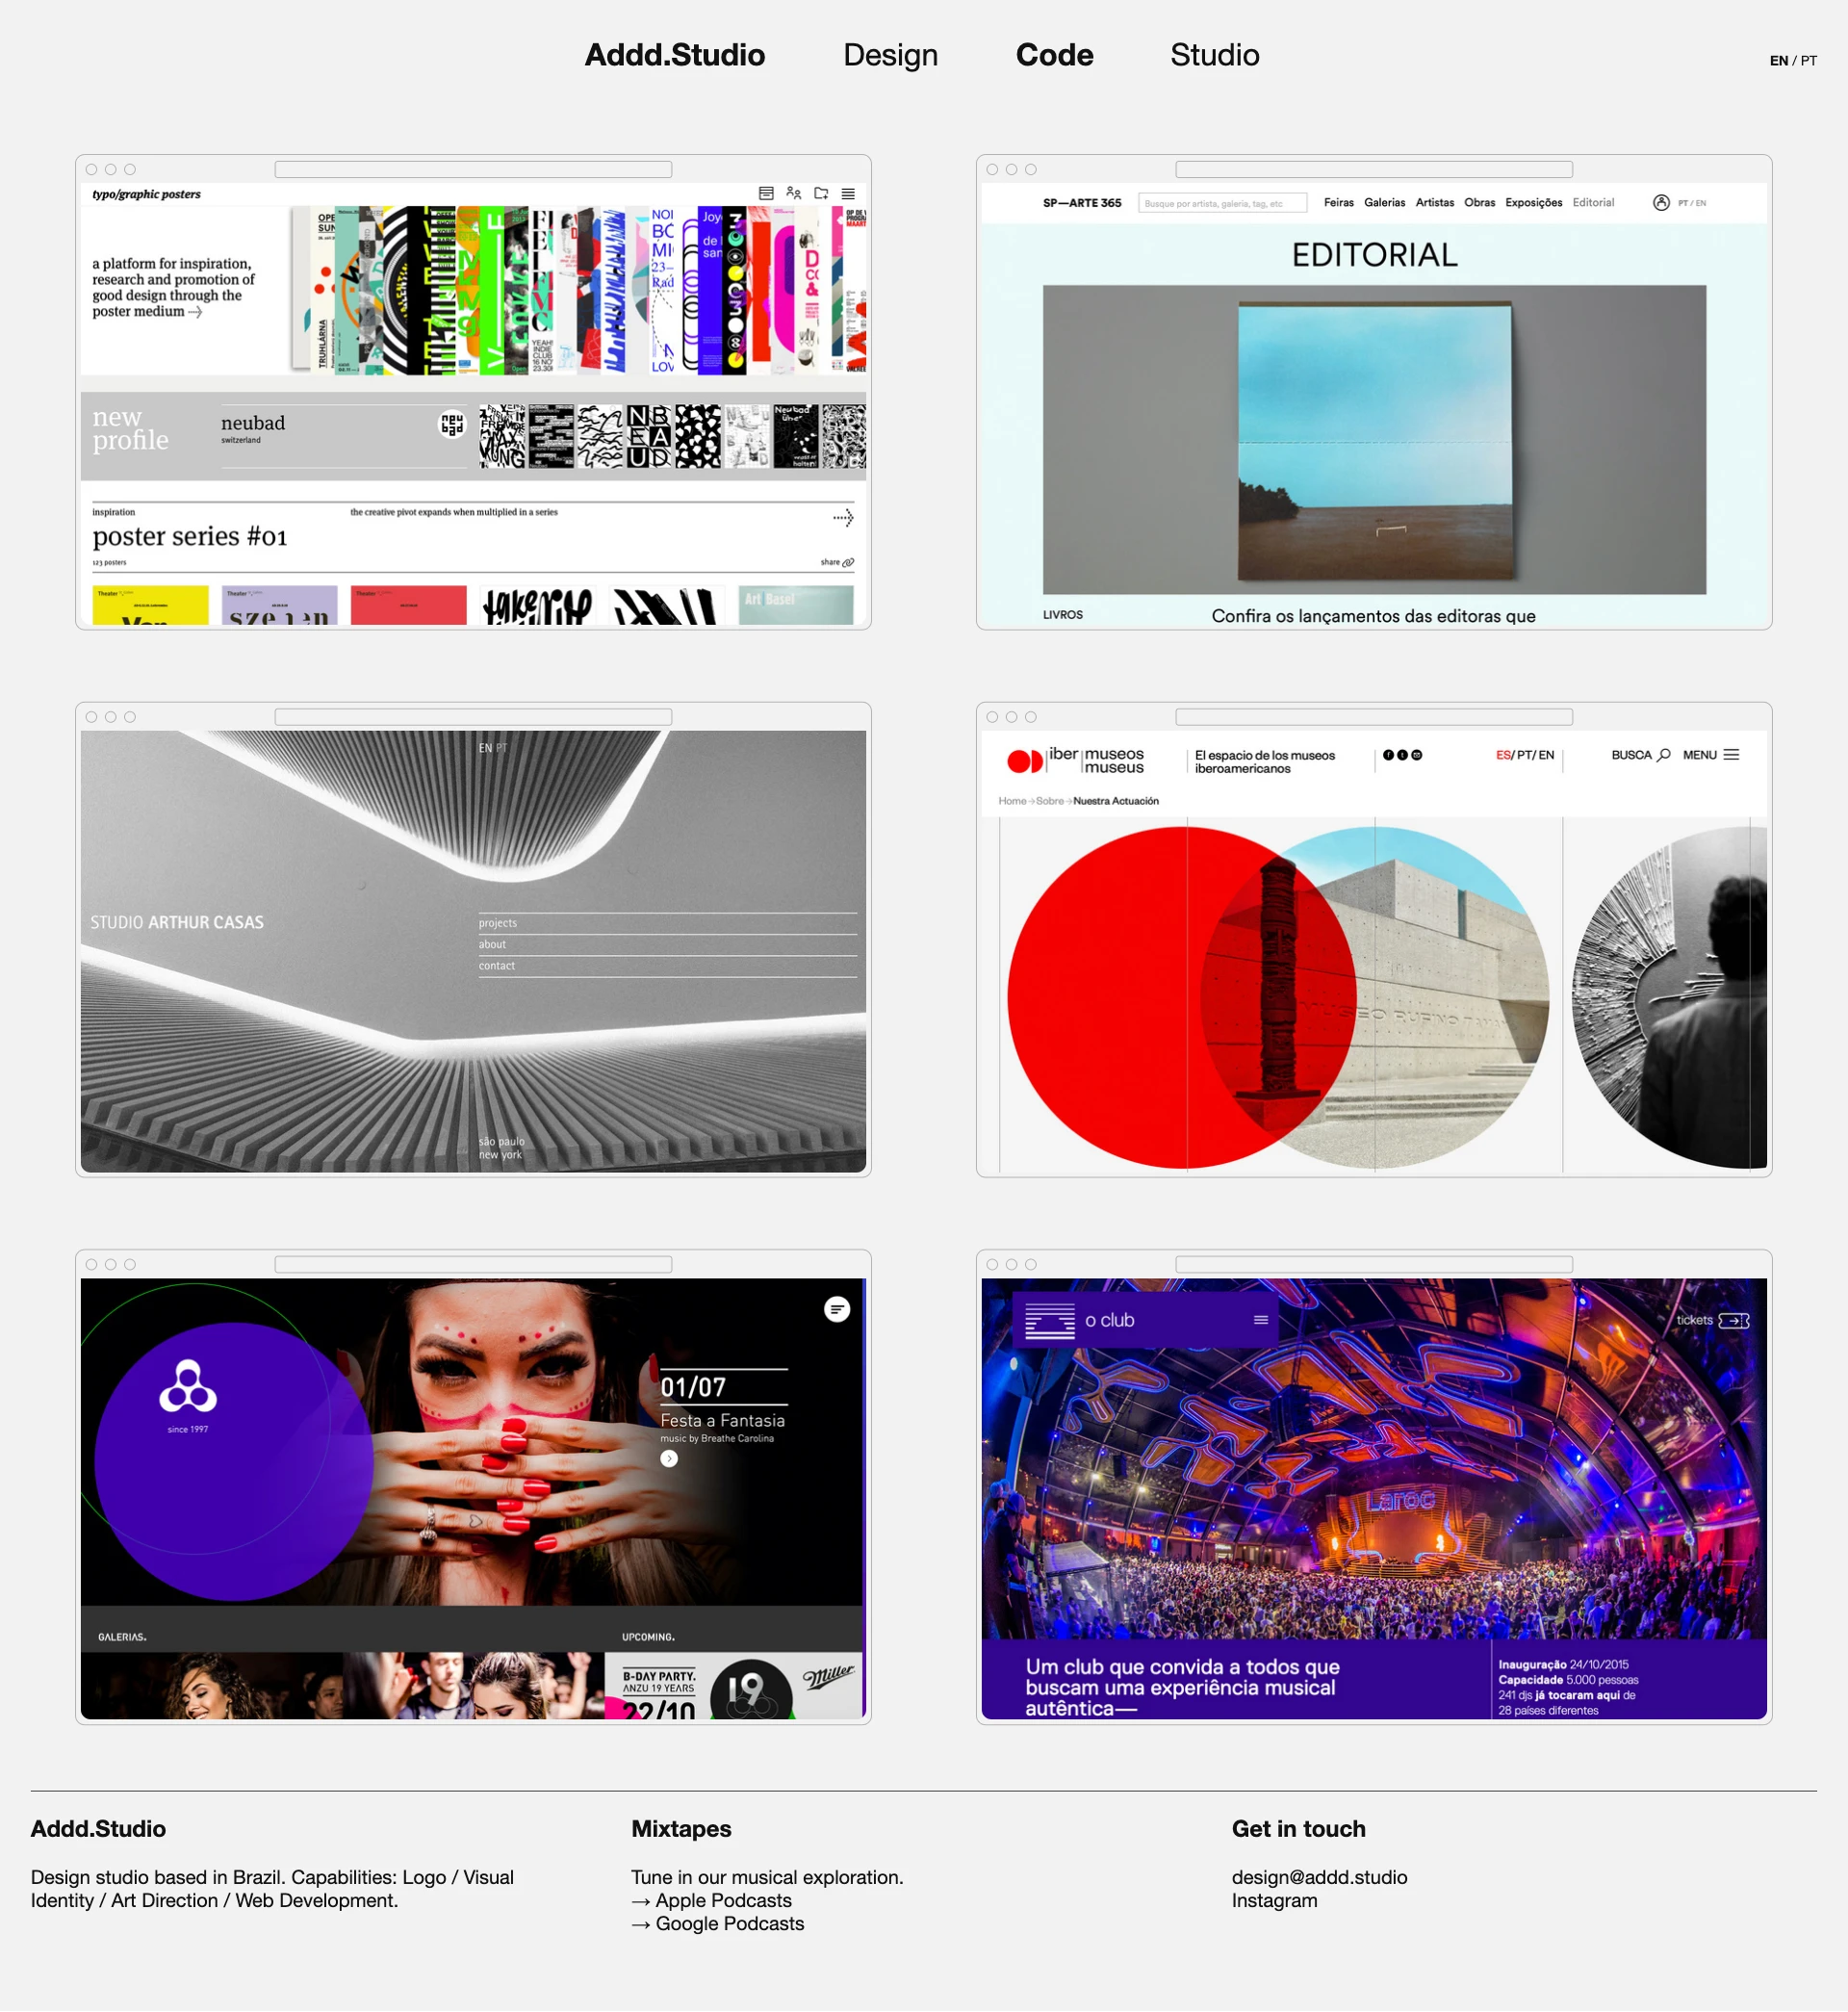 Addd.Studio Landing Page Example: Design studio based in Brazil. Capabilities: Logo / Visual Identity / Art Direction / Web Development.